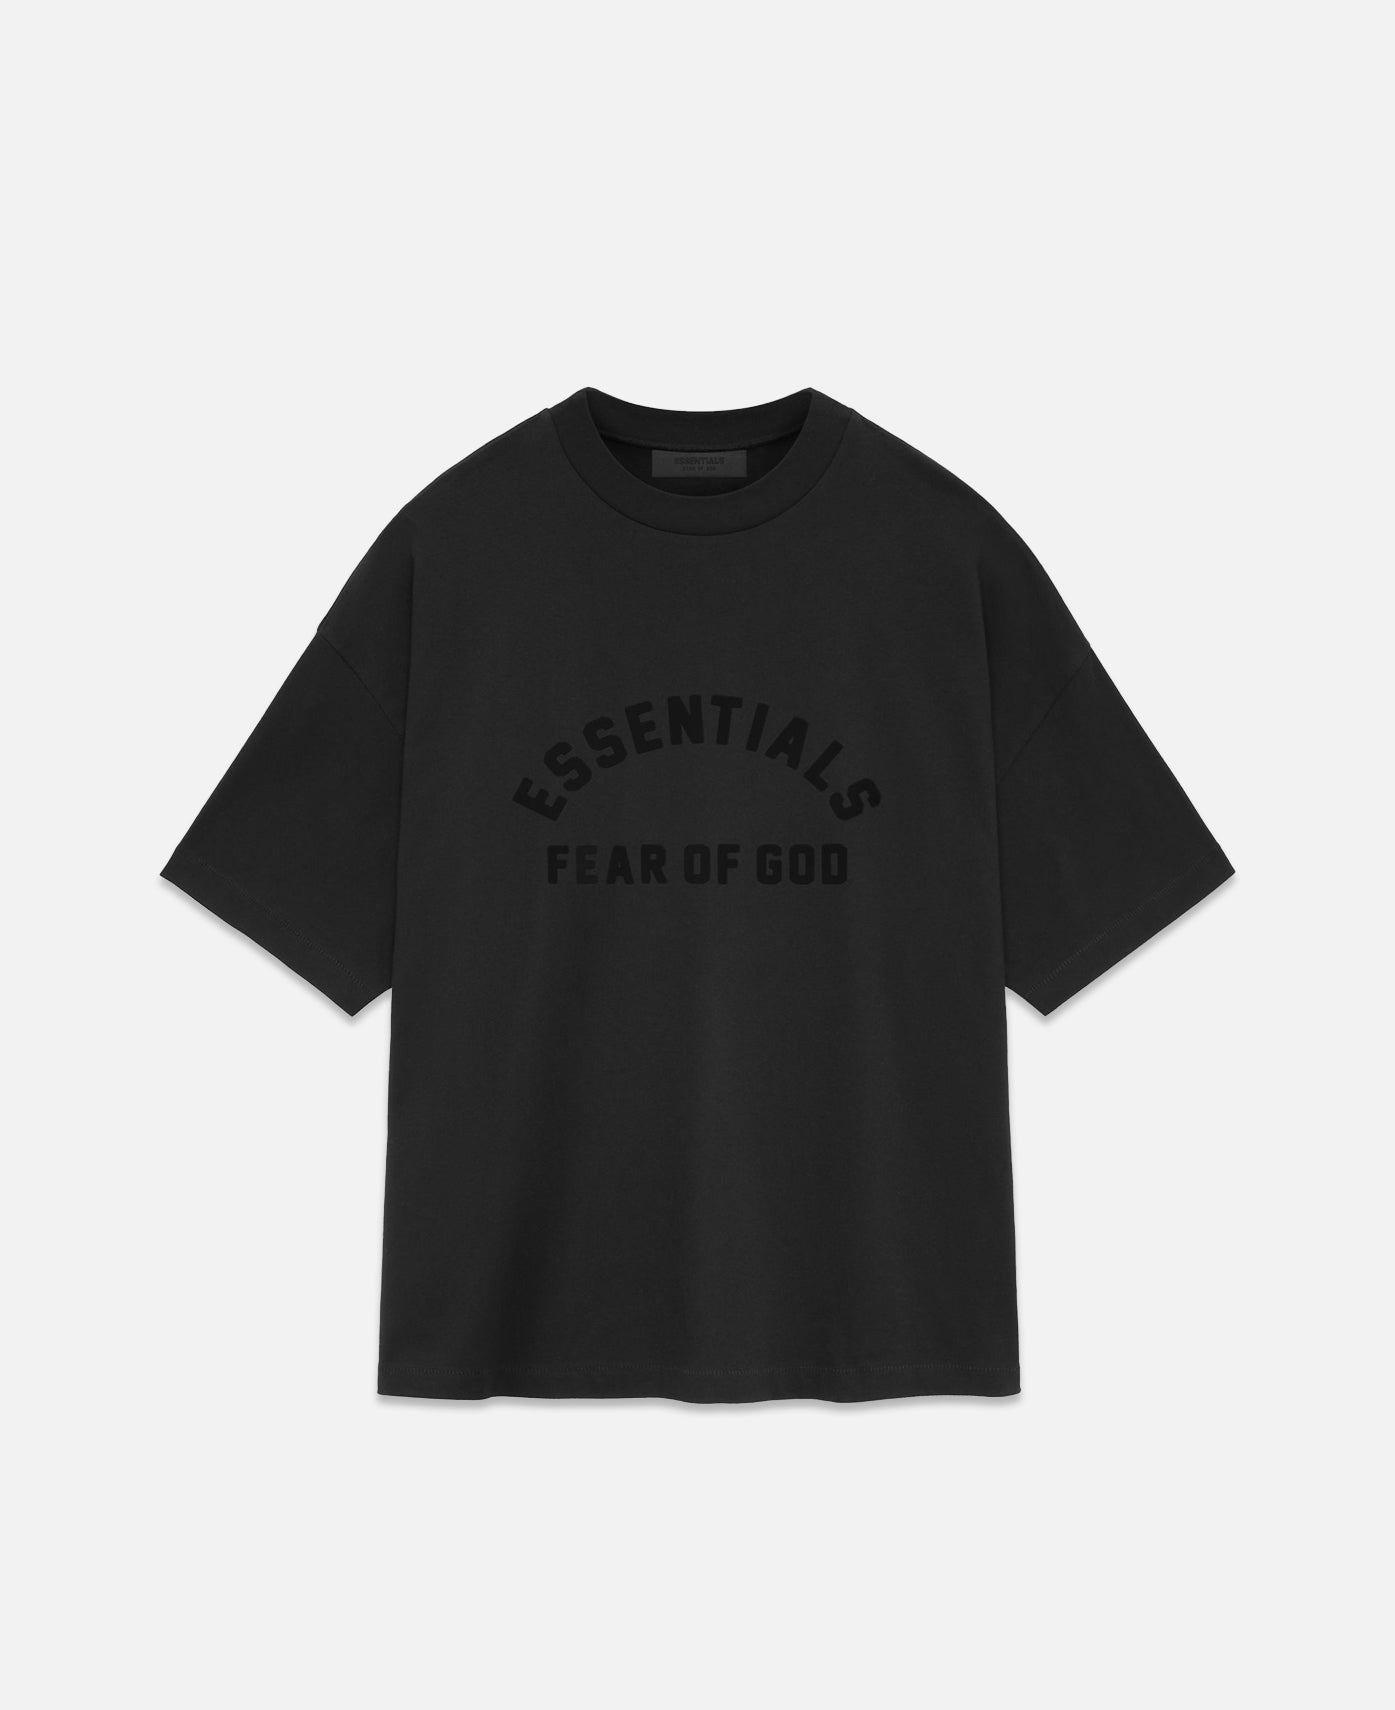 Heavy S/S T-Shirt (Black)